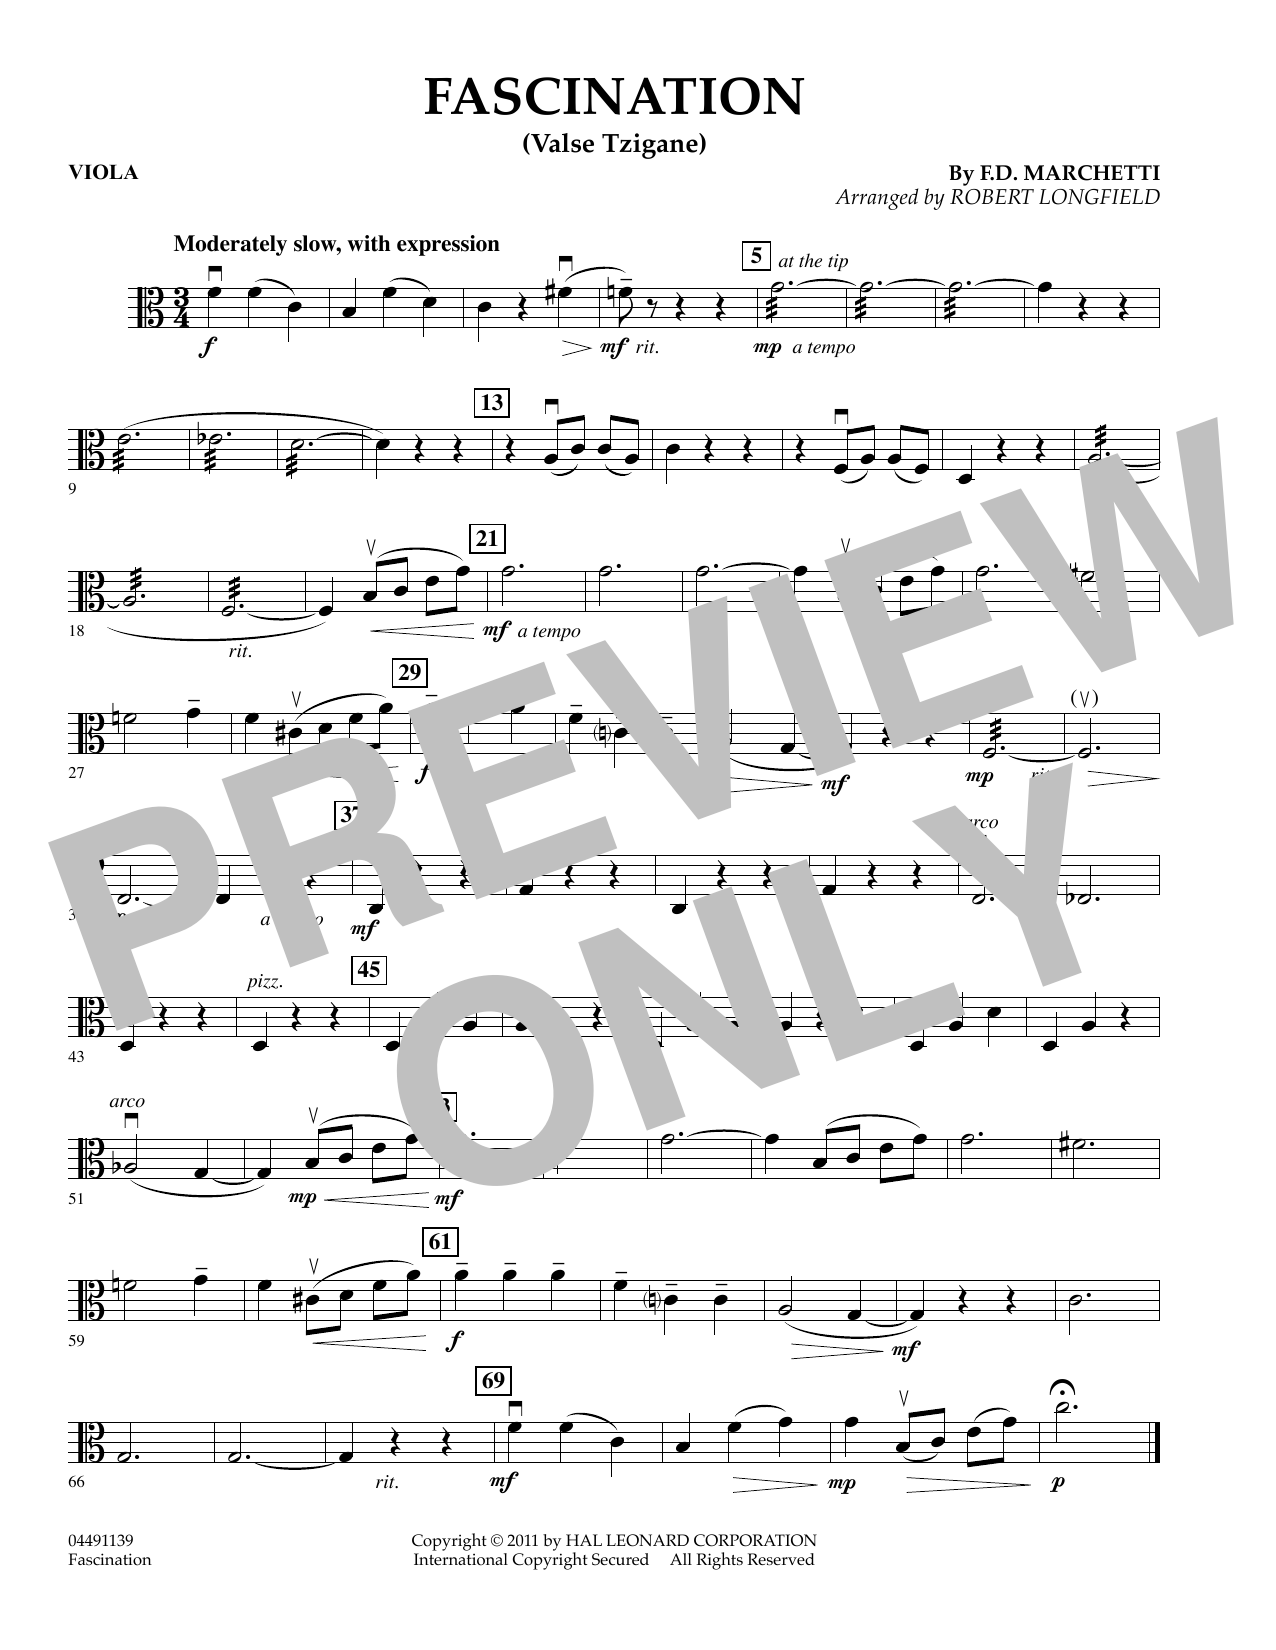 Robert Longfield Fascination (Valse Tzigane) - Viola Sheet Music Notes & Chords for String Quartet - Download or Print PDF